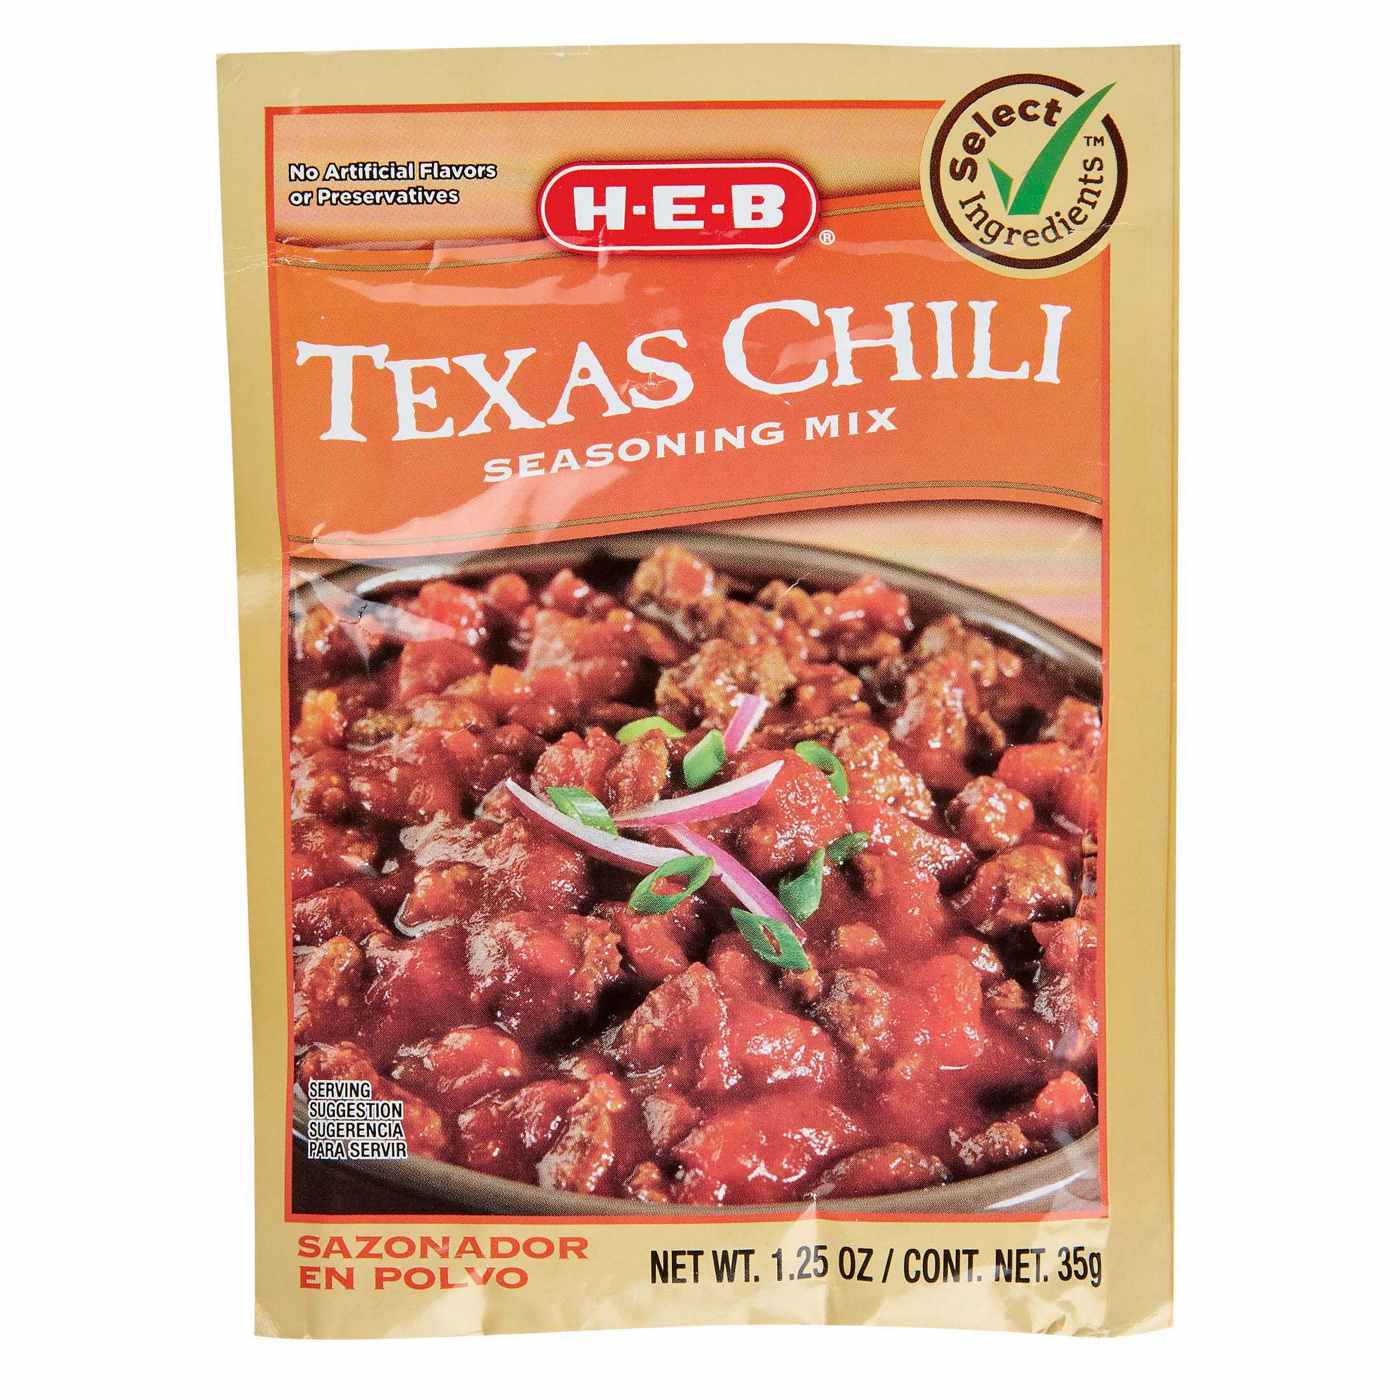 McCormick Tex-Mex Chili Seasoning Mix, 1.25 oz